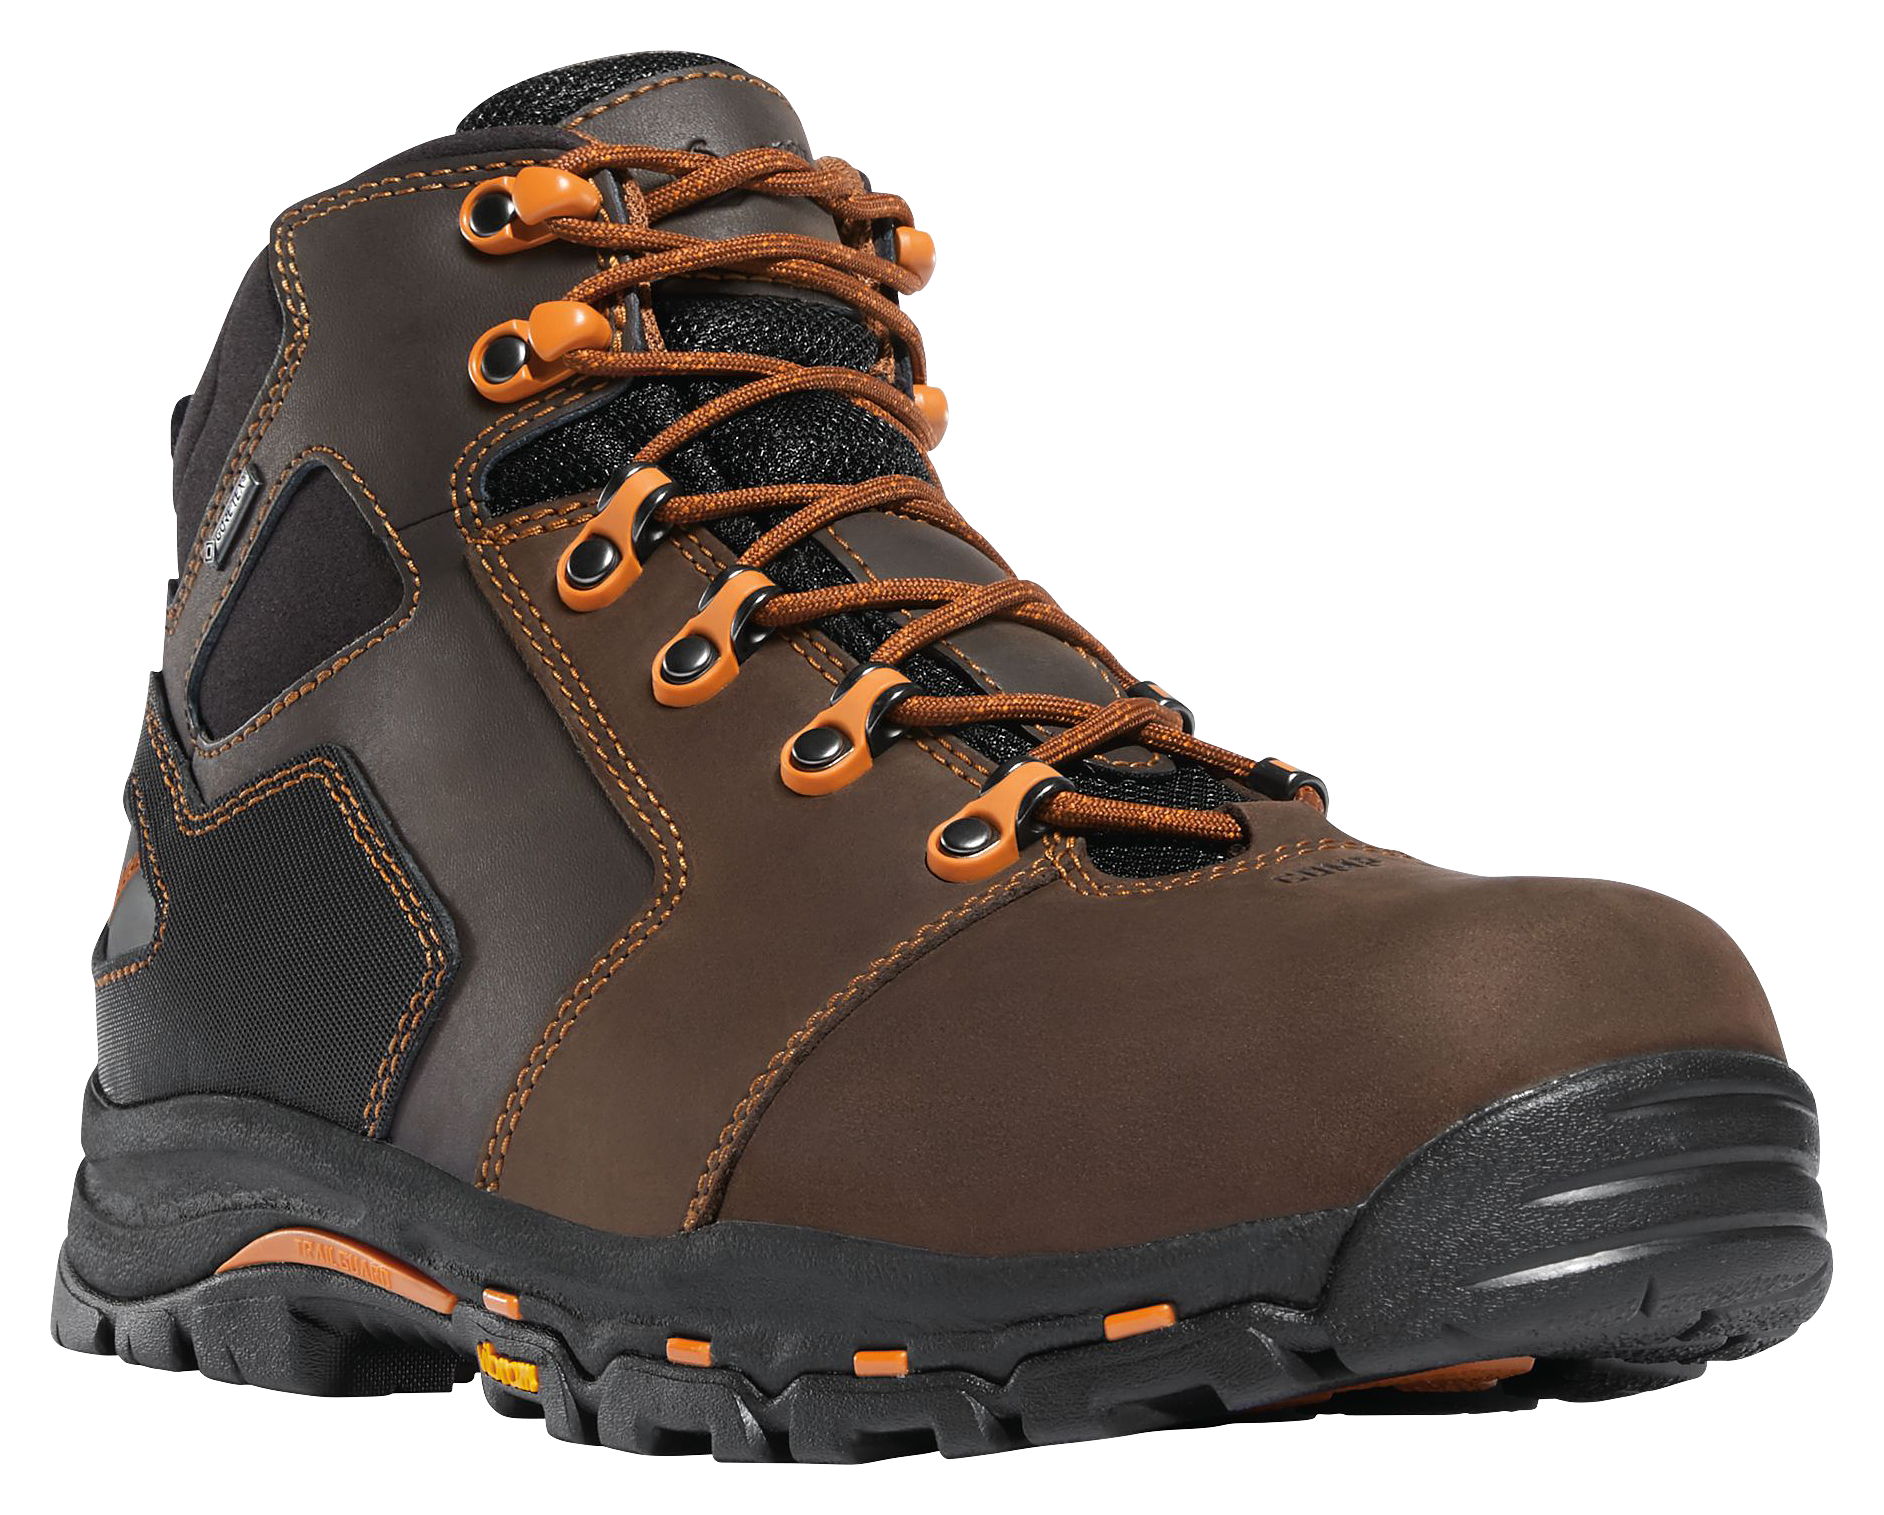 Danner Vicious 4.5'' GORE-TEX EH Work Boots for Men - Brown/Orange - 7M